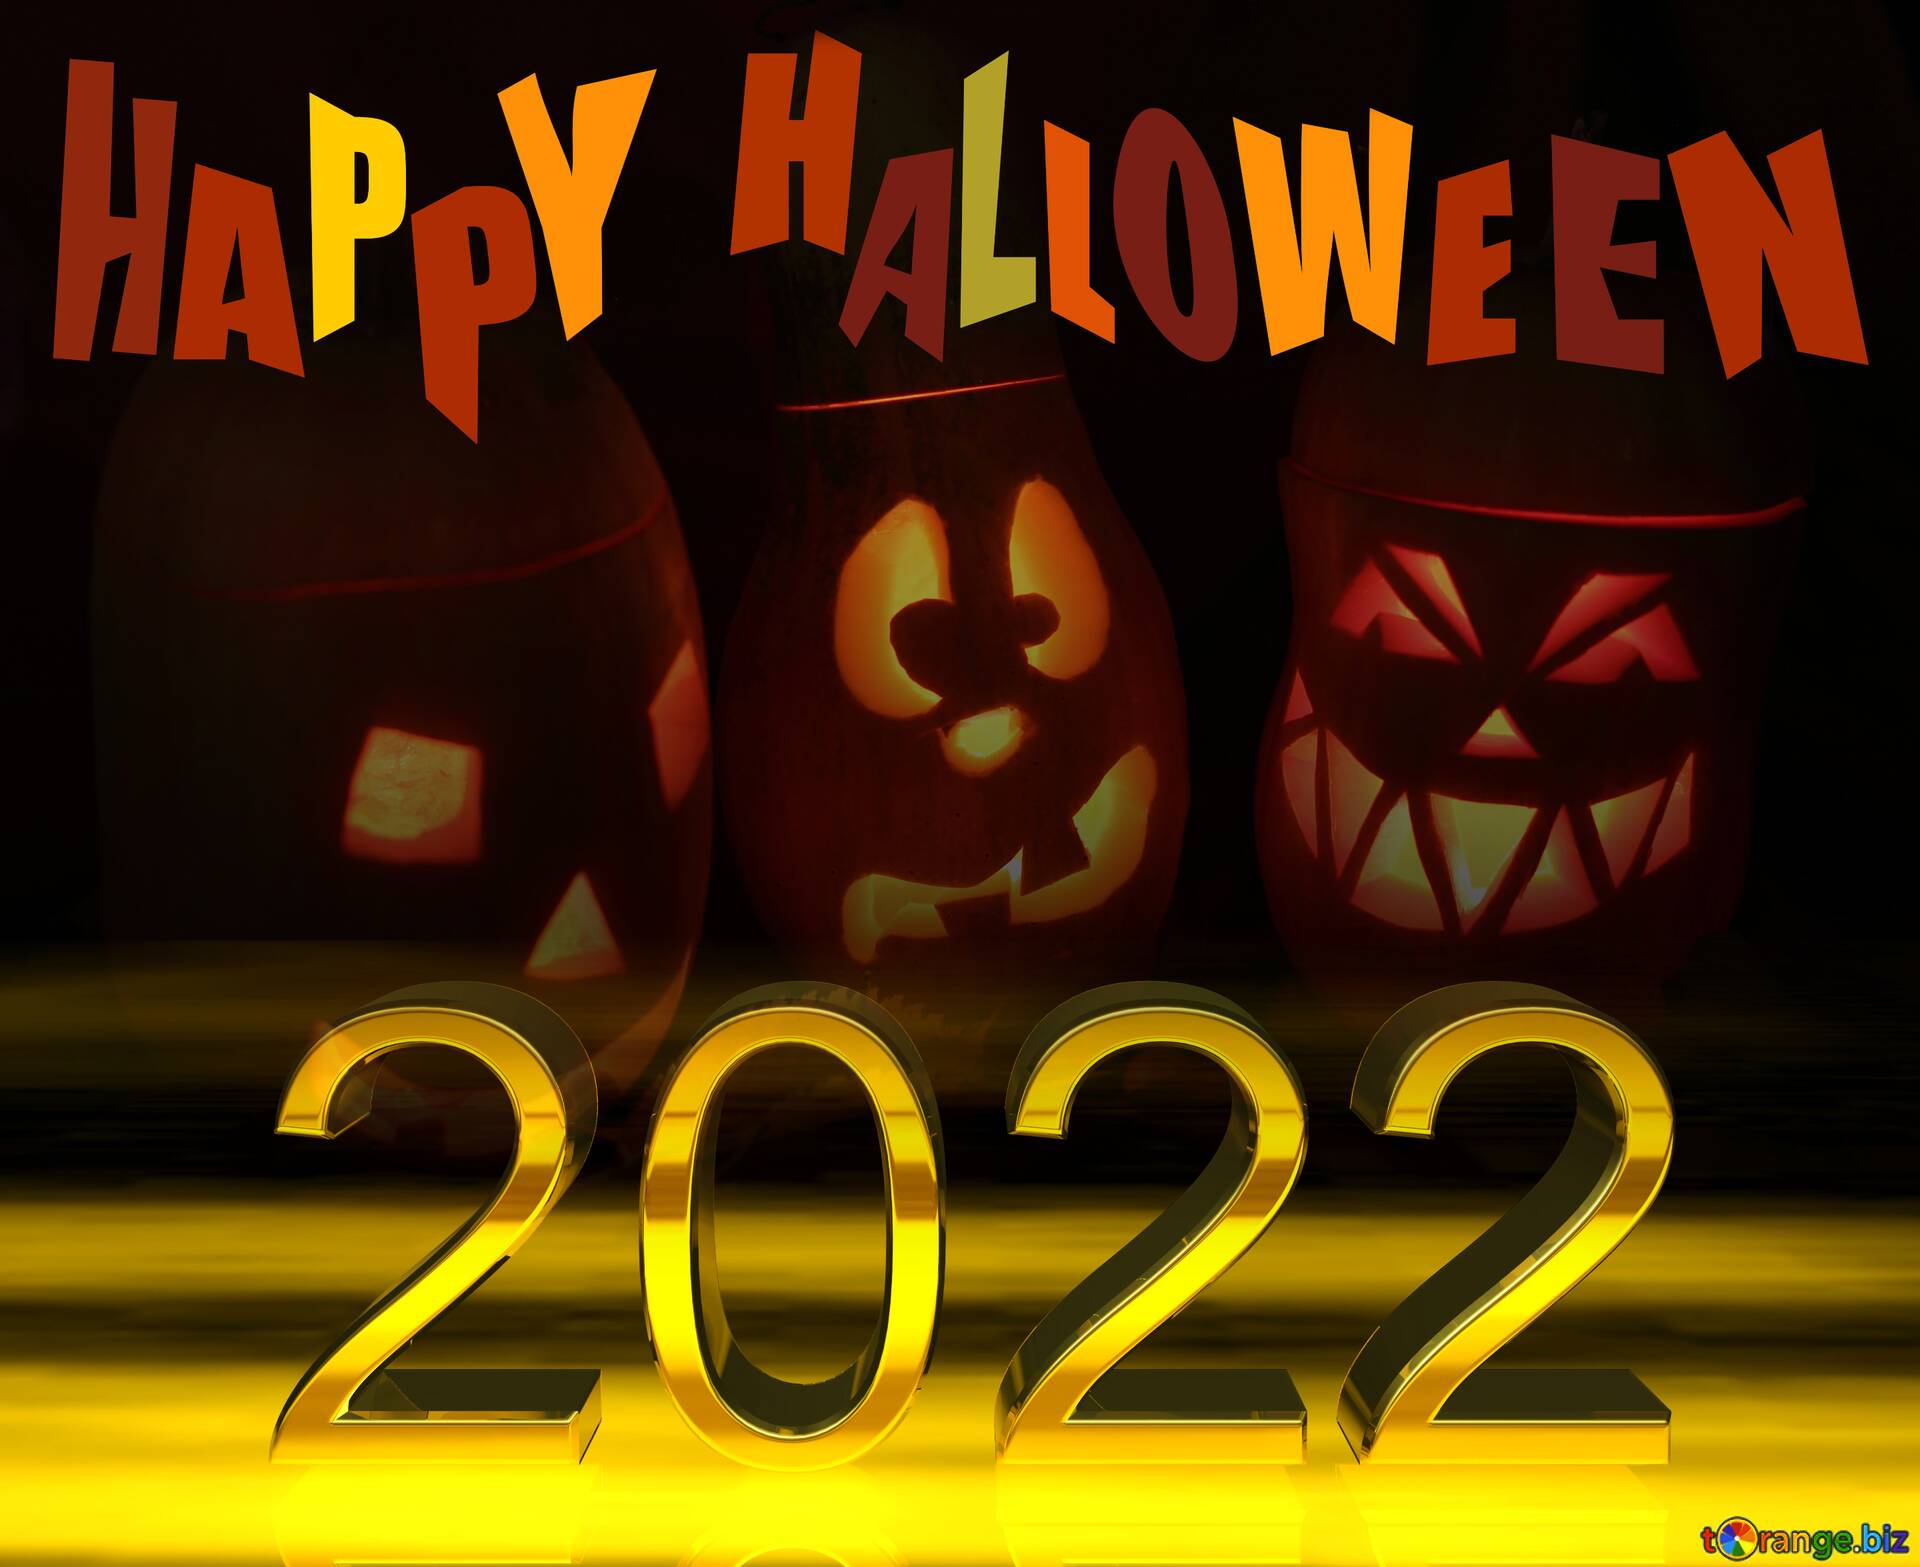 Download Free Picture Pumpkins 2022 Happy Halloween 3D Digits On CC BY License Free Image Stock TOrange.biz Fx №213604